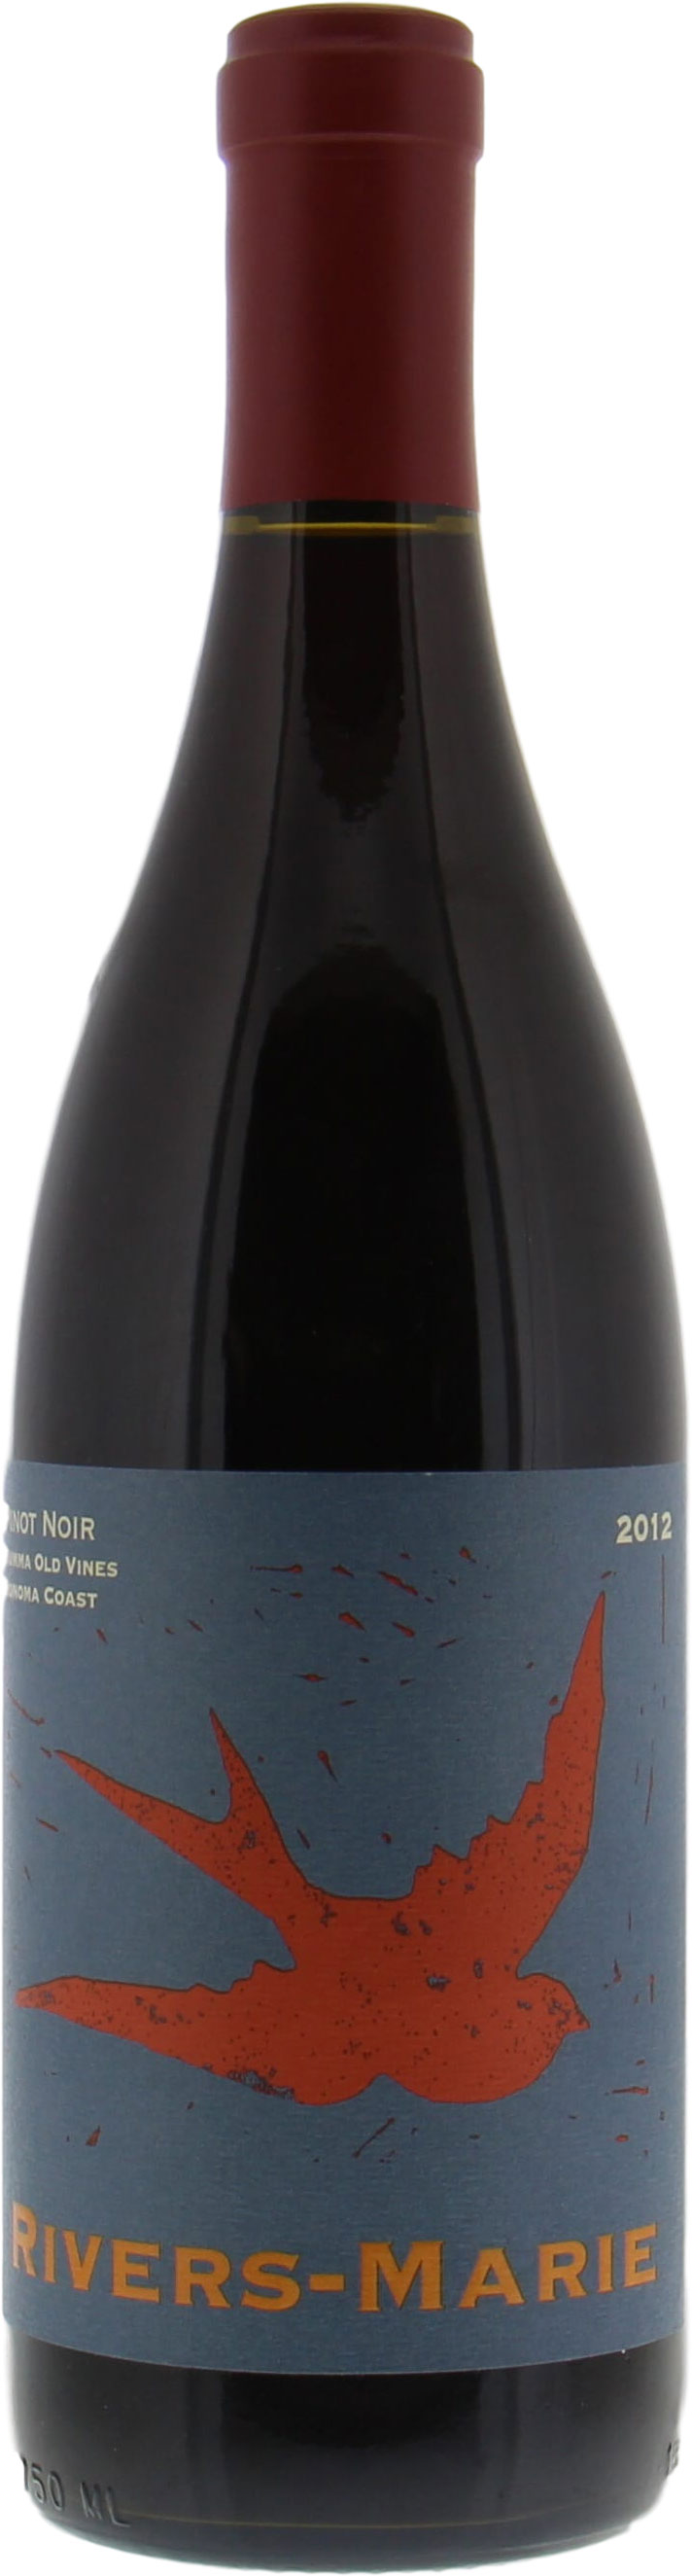 Rivers-Marie  - Pinot Noir Summa Old Vines 2012